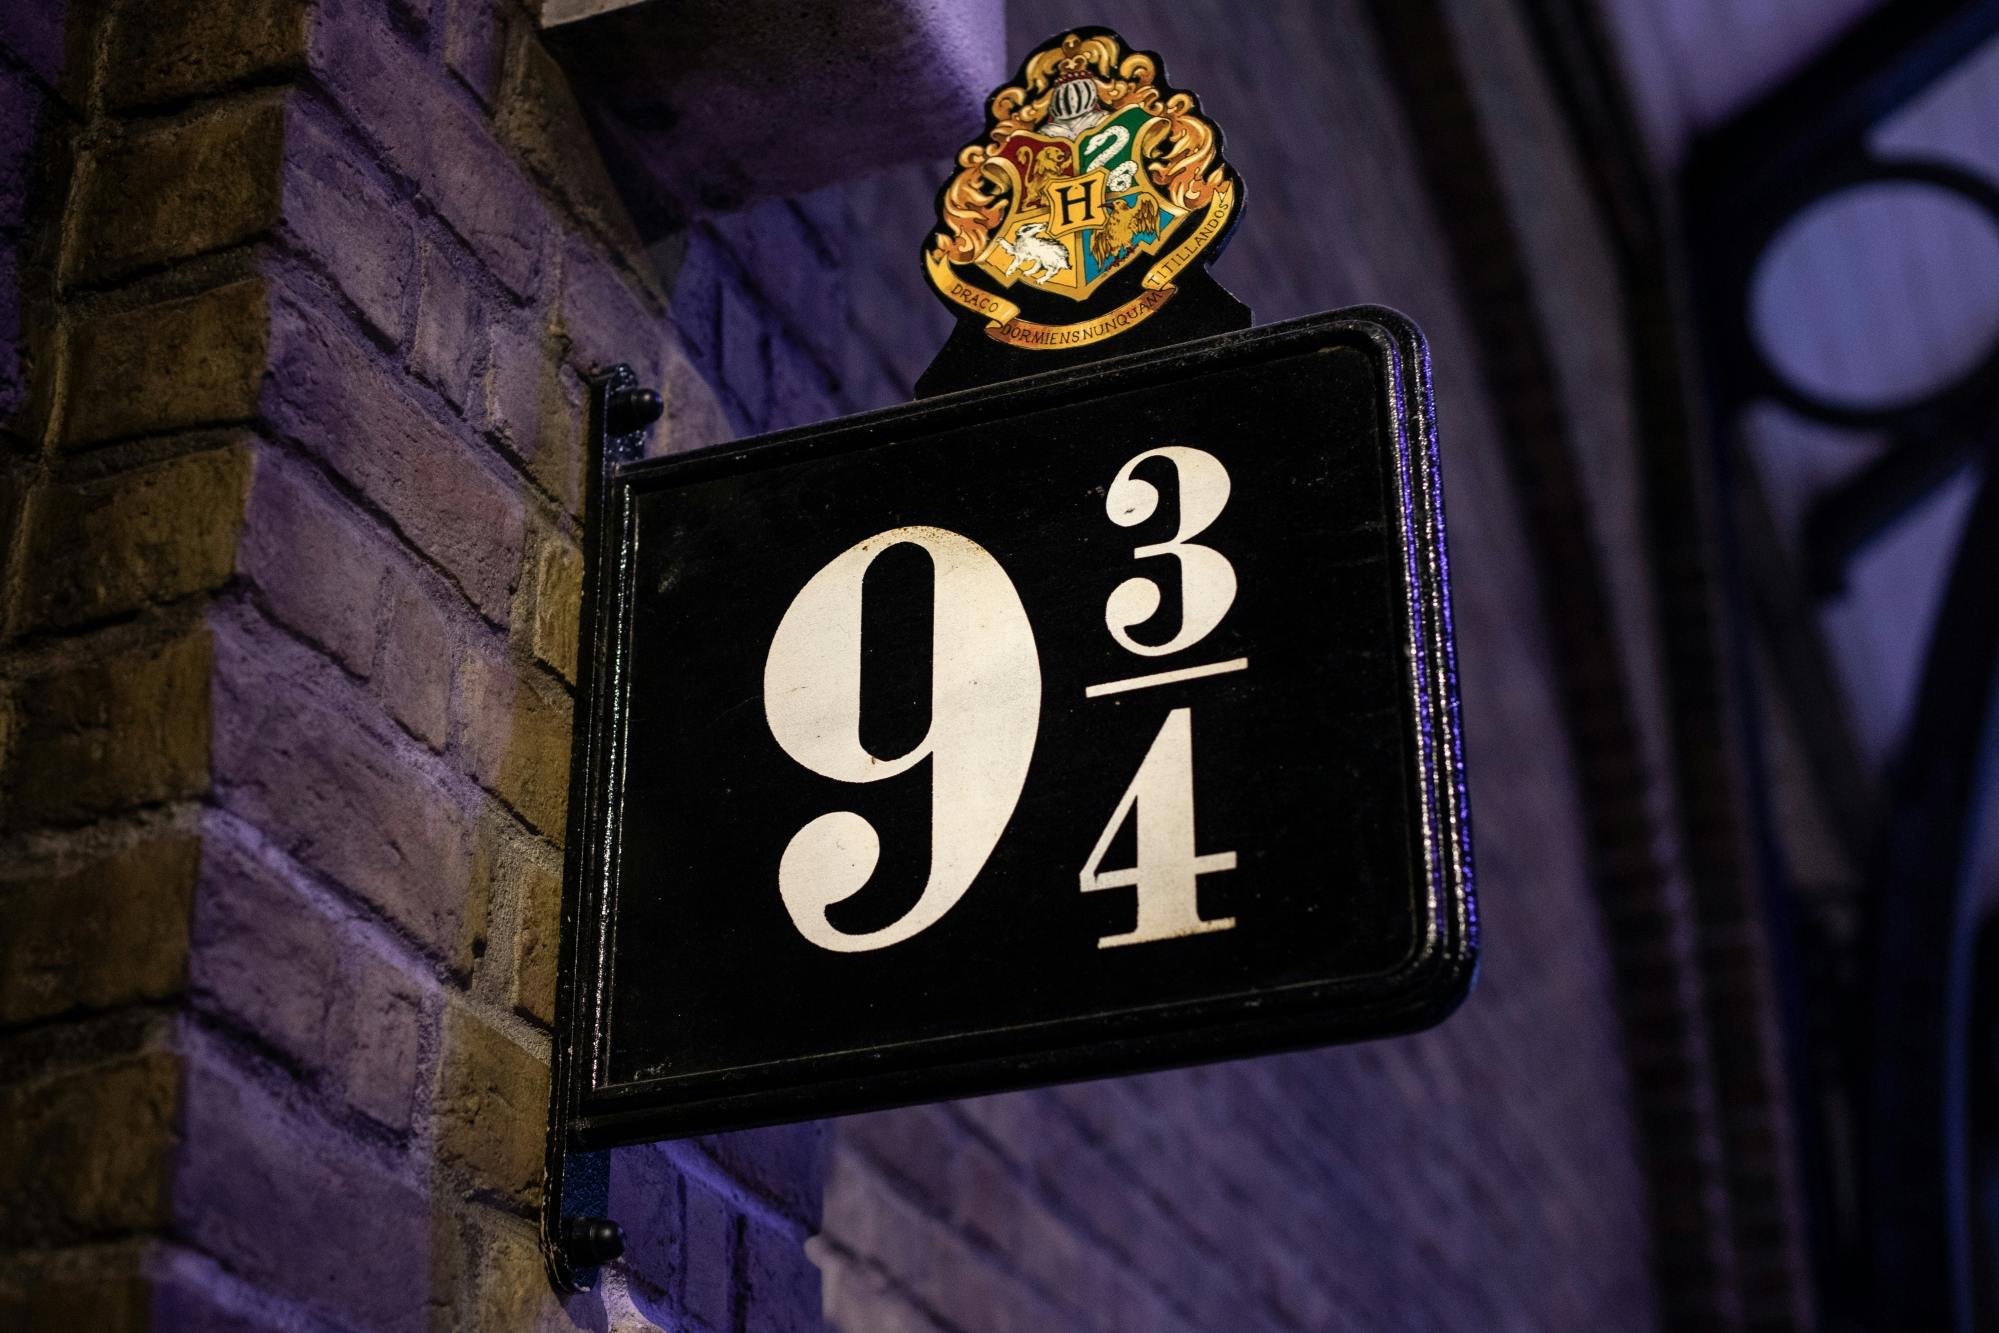 Warner Bros. studiotur London: Bak kulissene i Harry Potters verden – billett med transport